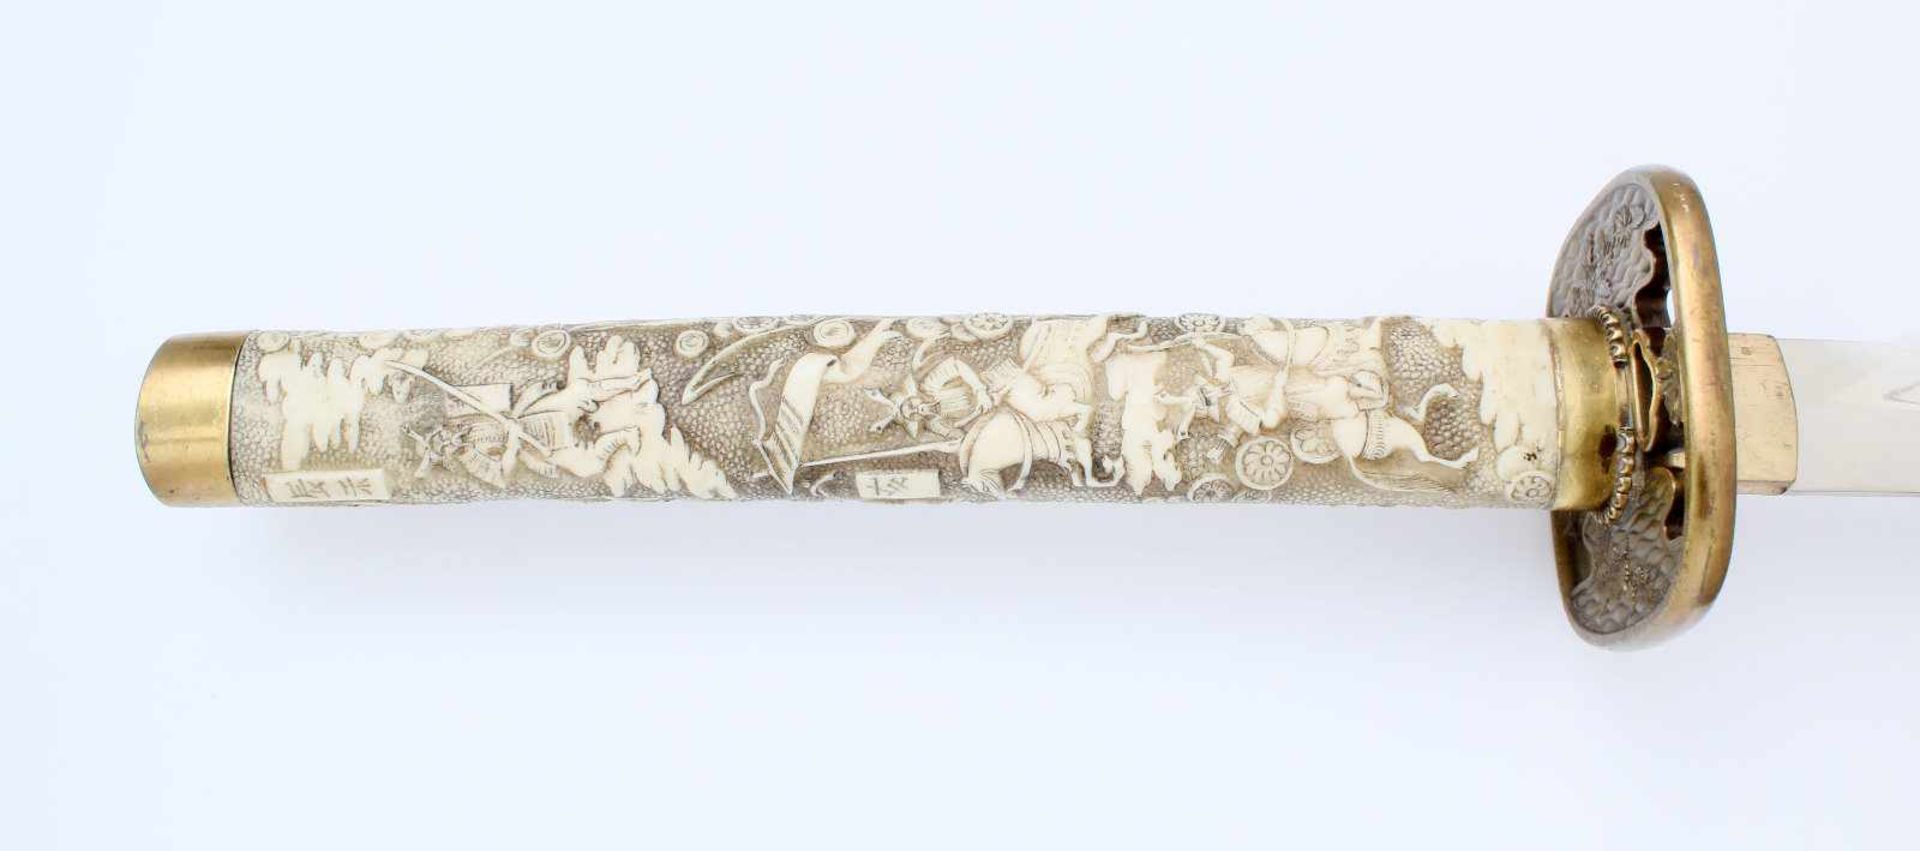 Japan Schwert "Katana" - 20. Jahrhundert Qualitätvolle Sammleranfertigung, nicht geschärfte, - Bild 4 aus 6